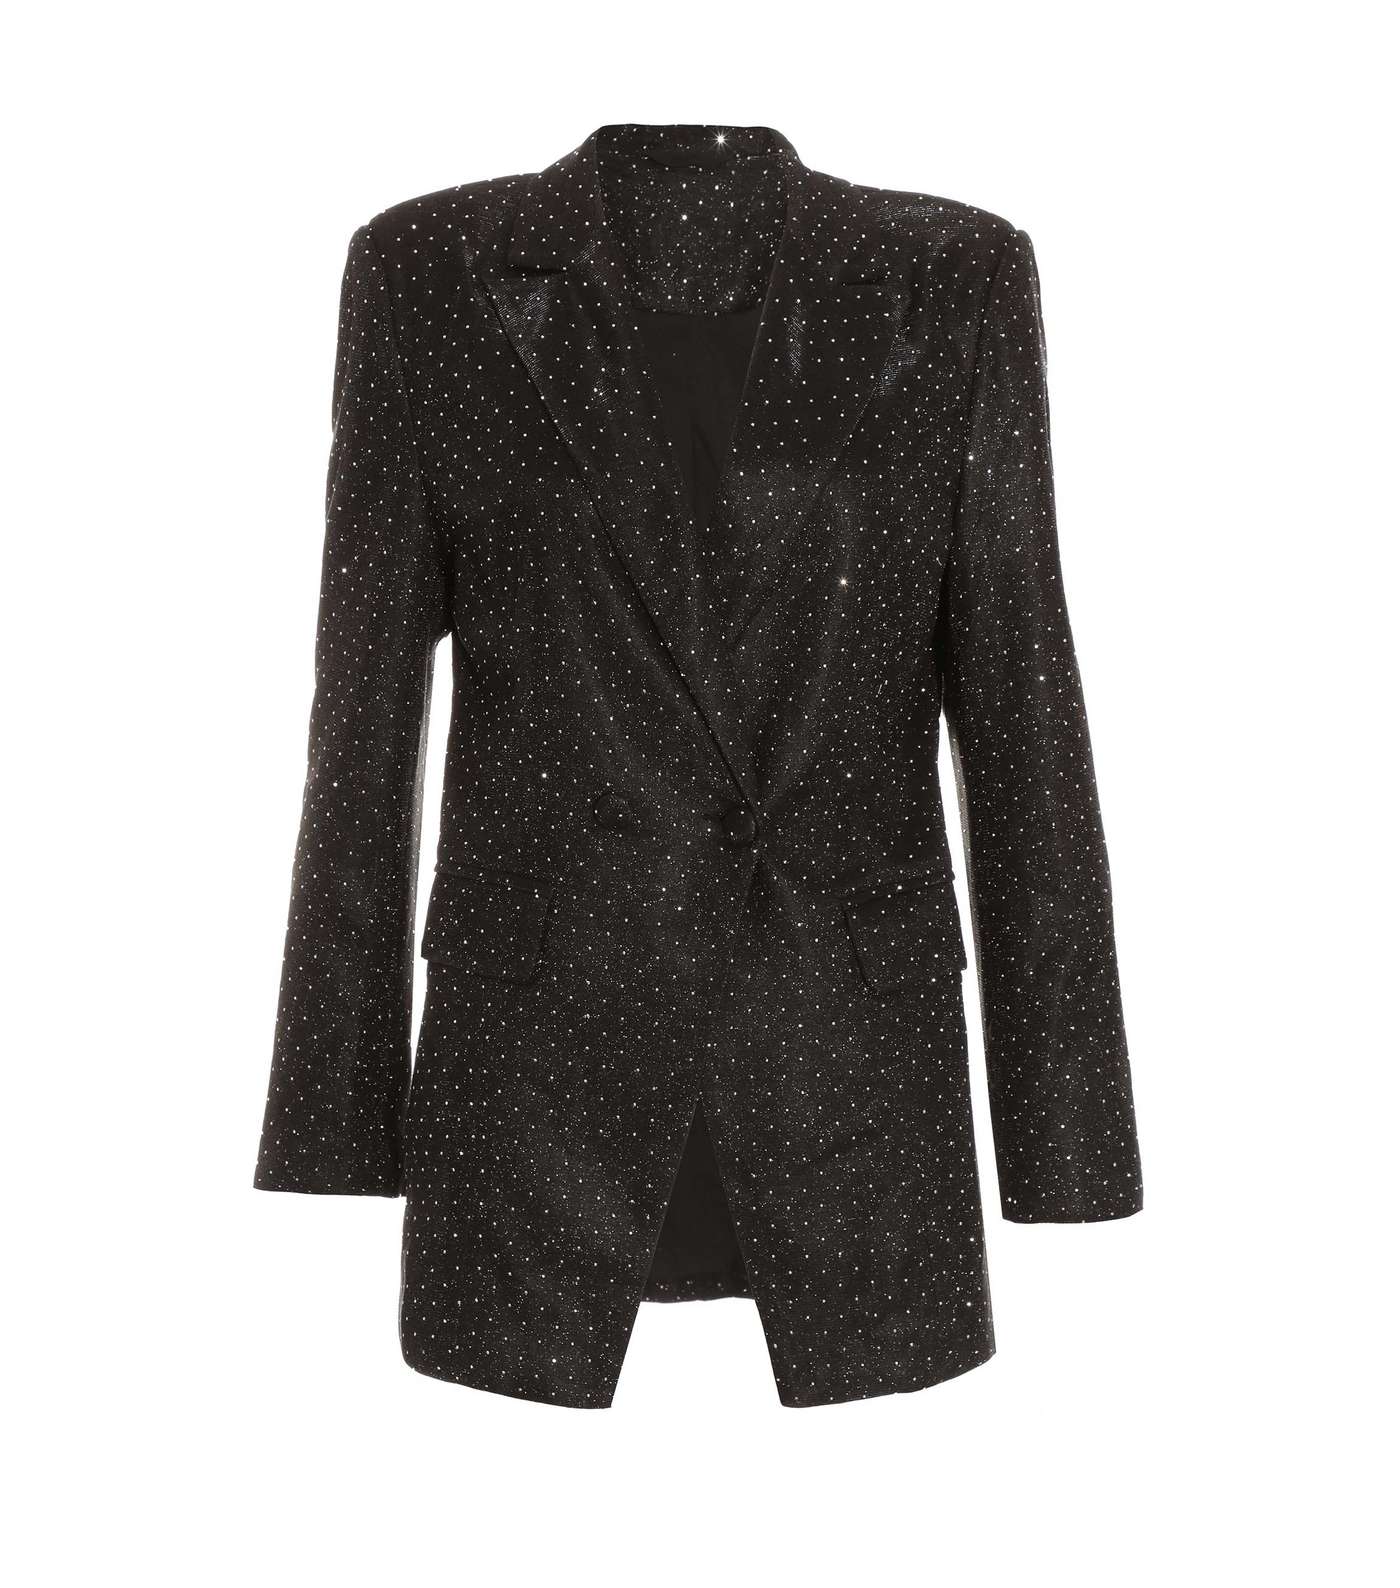 QUIZ Black Glitter Spot Tailored Blazer Image 4